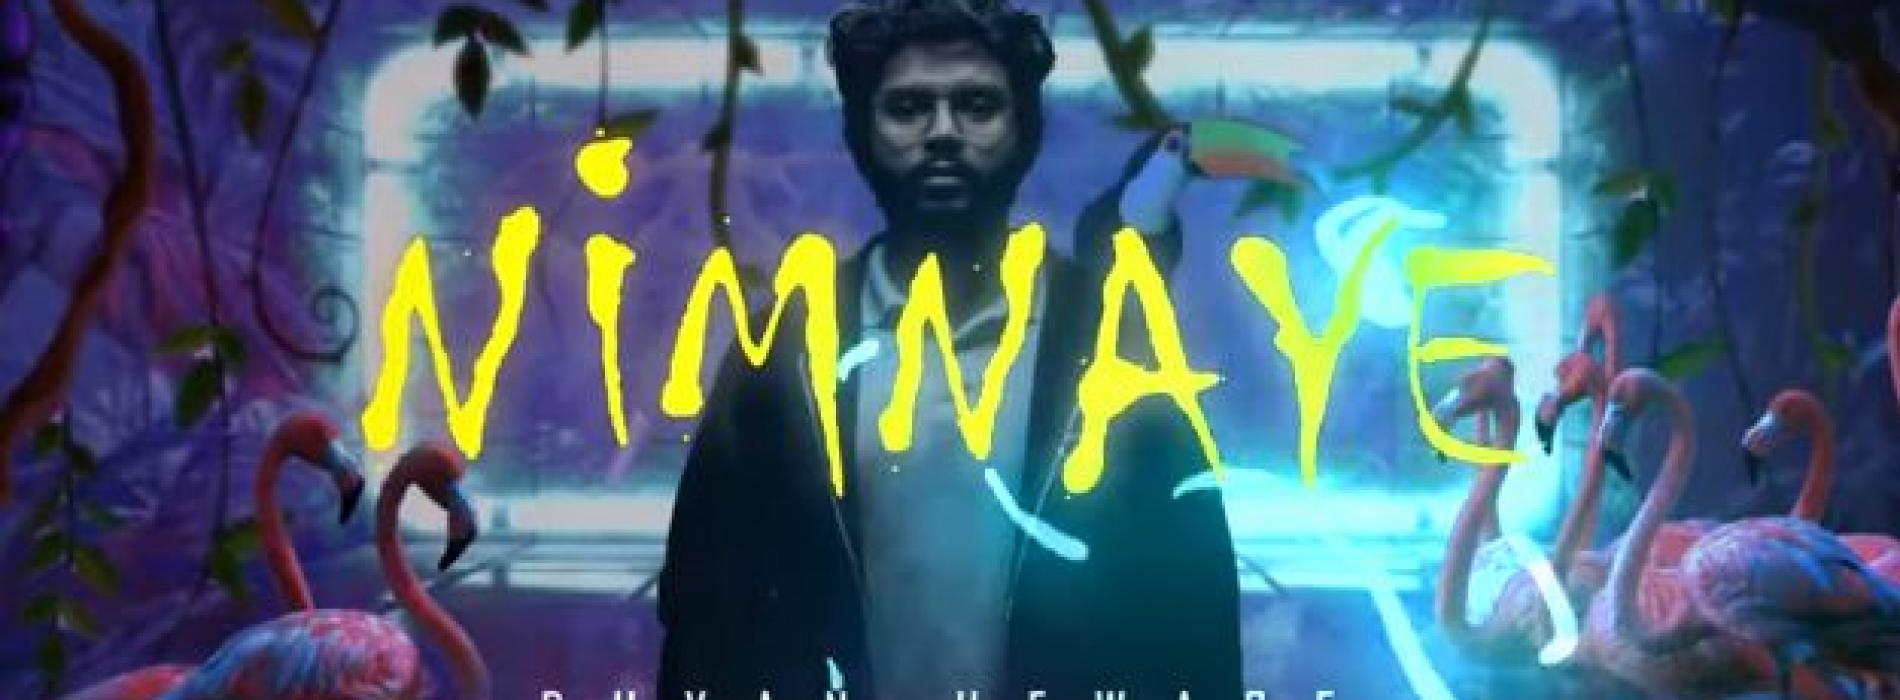 New Music : Nimnaye (නිම්නයේ) – Dhyan Hewage | SUBEE (Official Lyric Video)